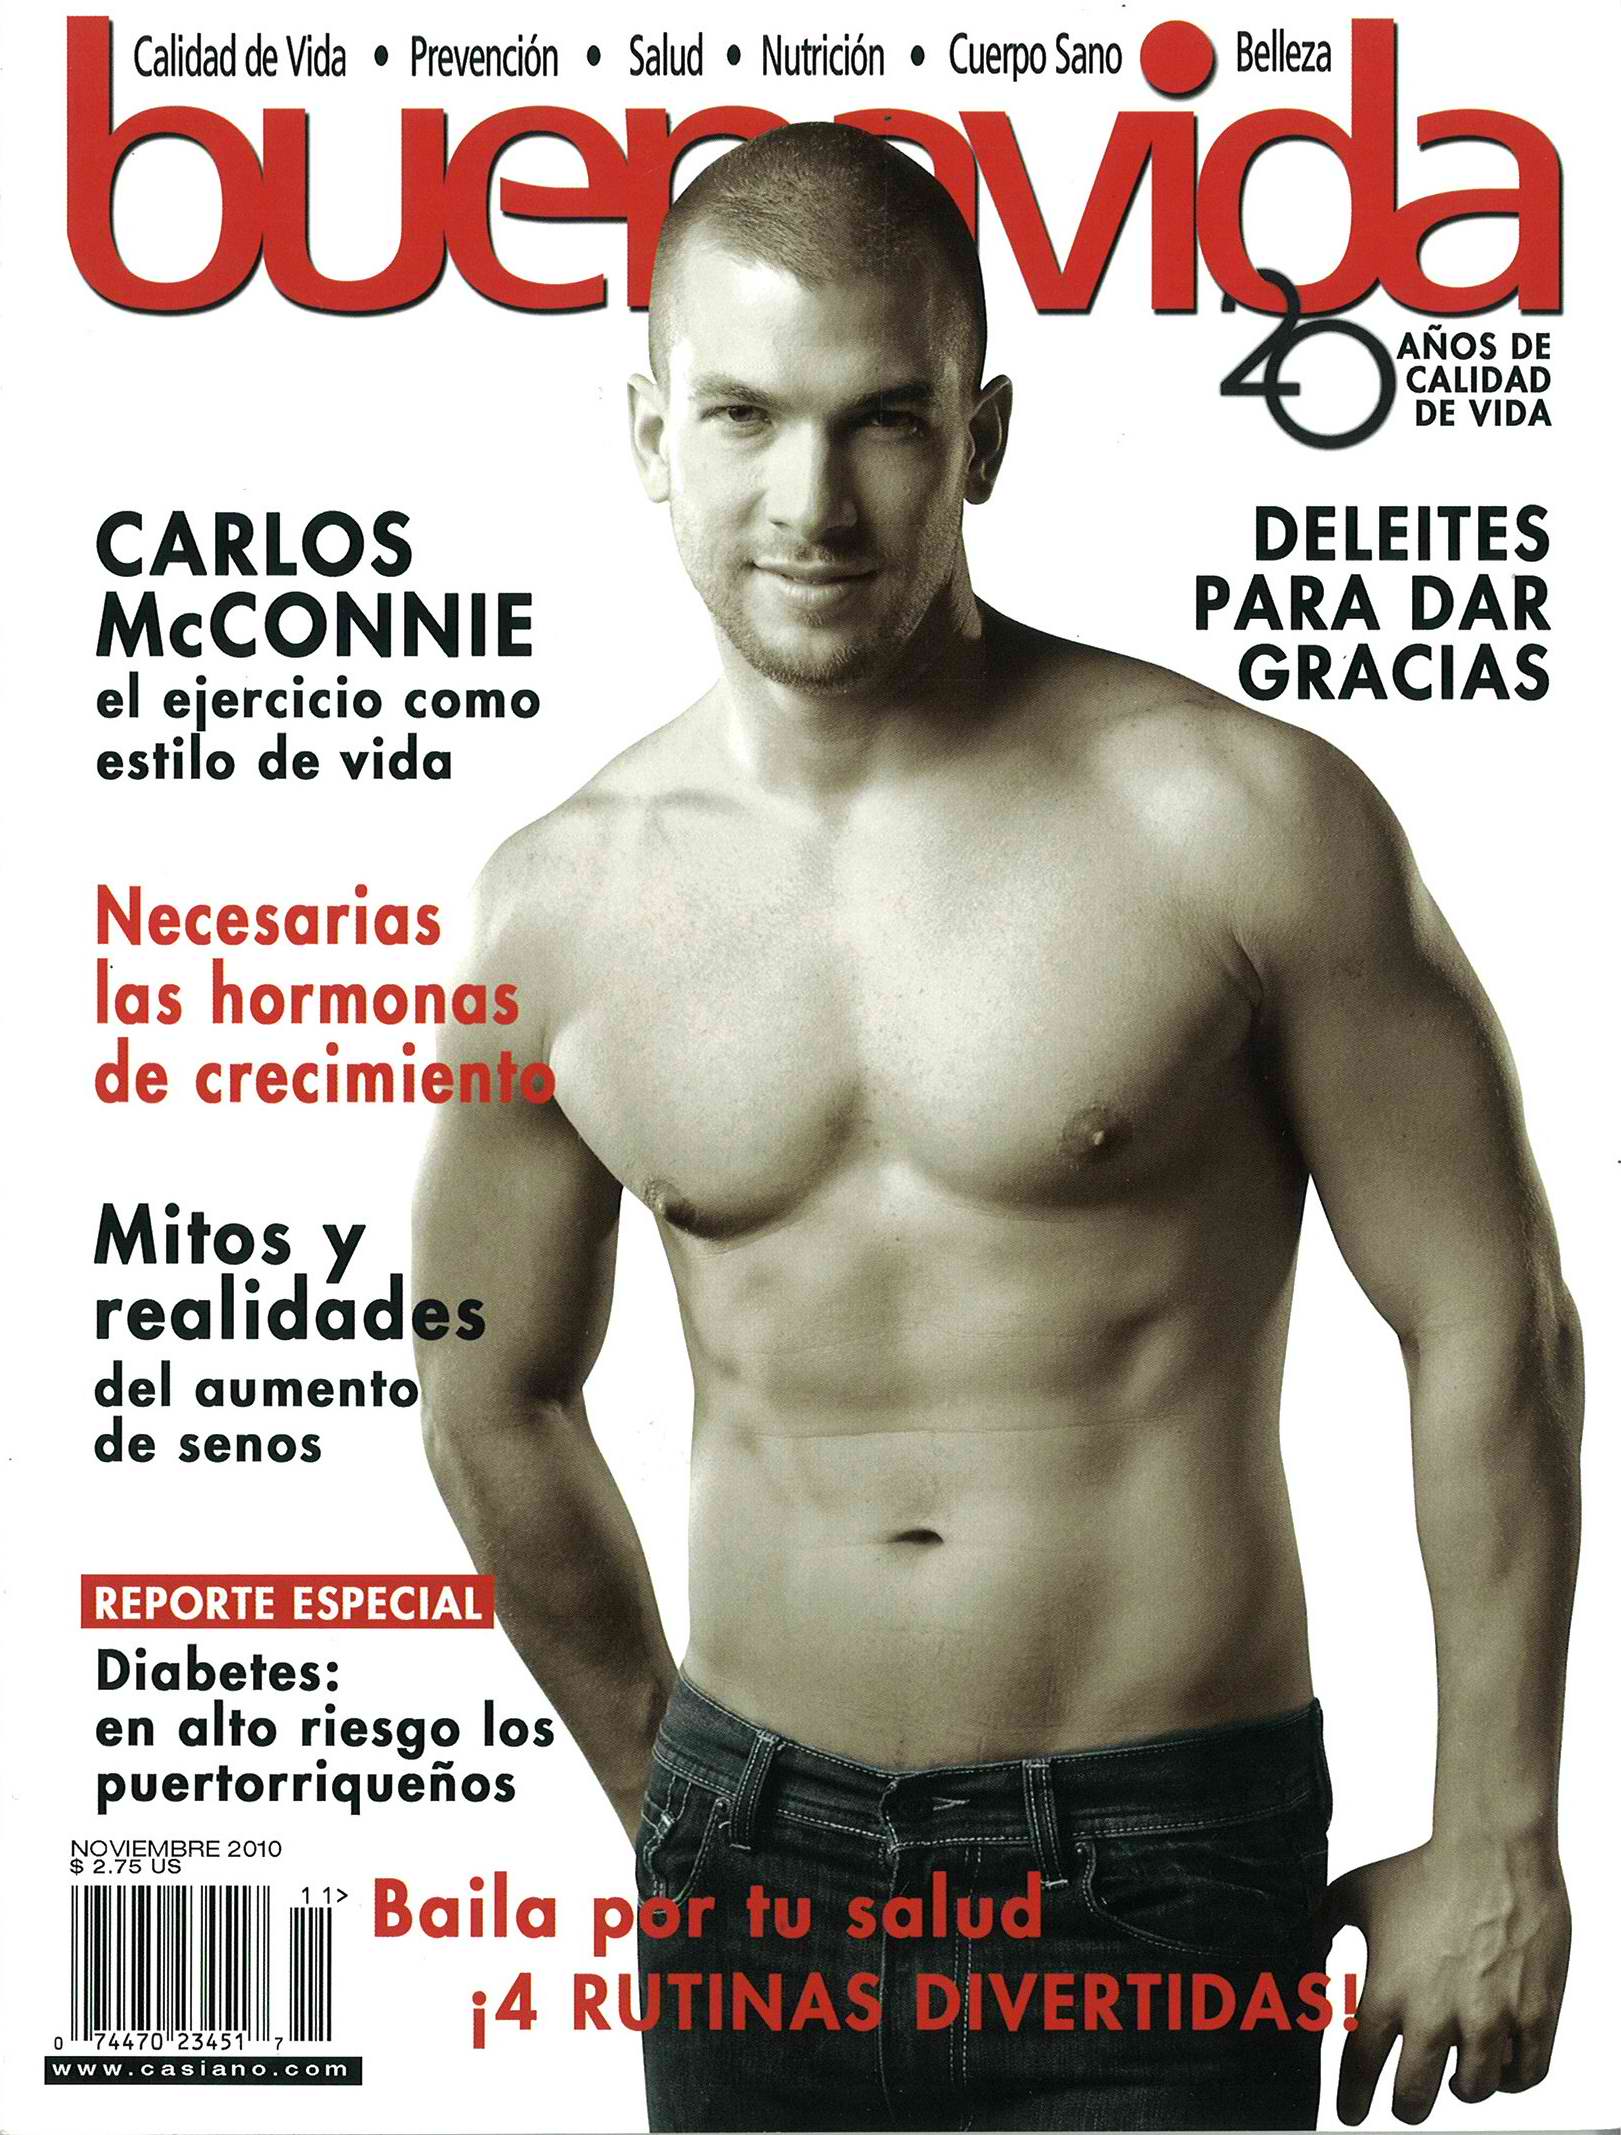 Celebrity Cover for Buena Vida Magazine.